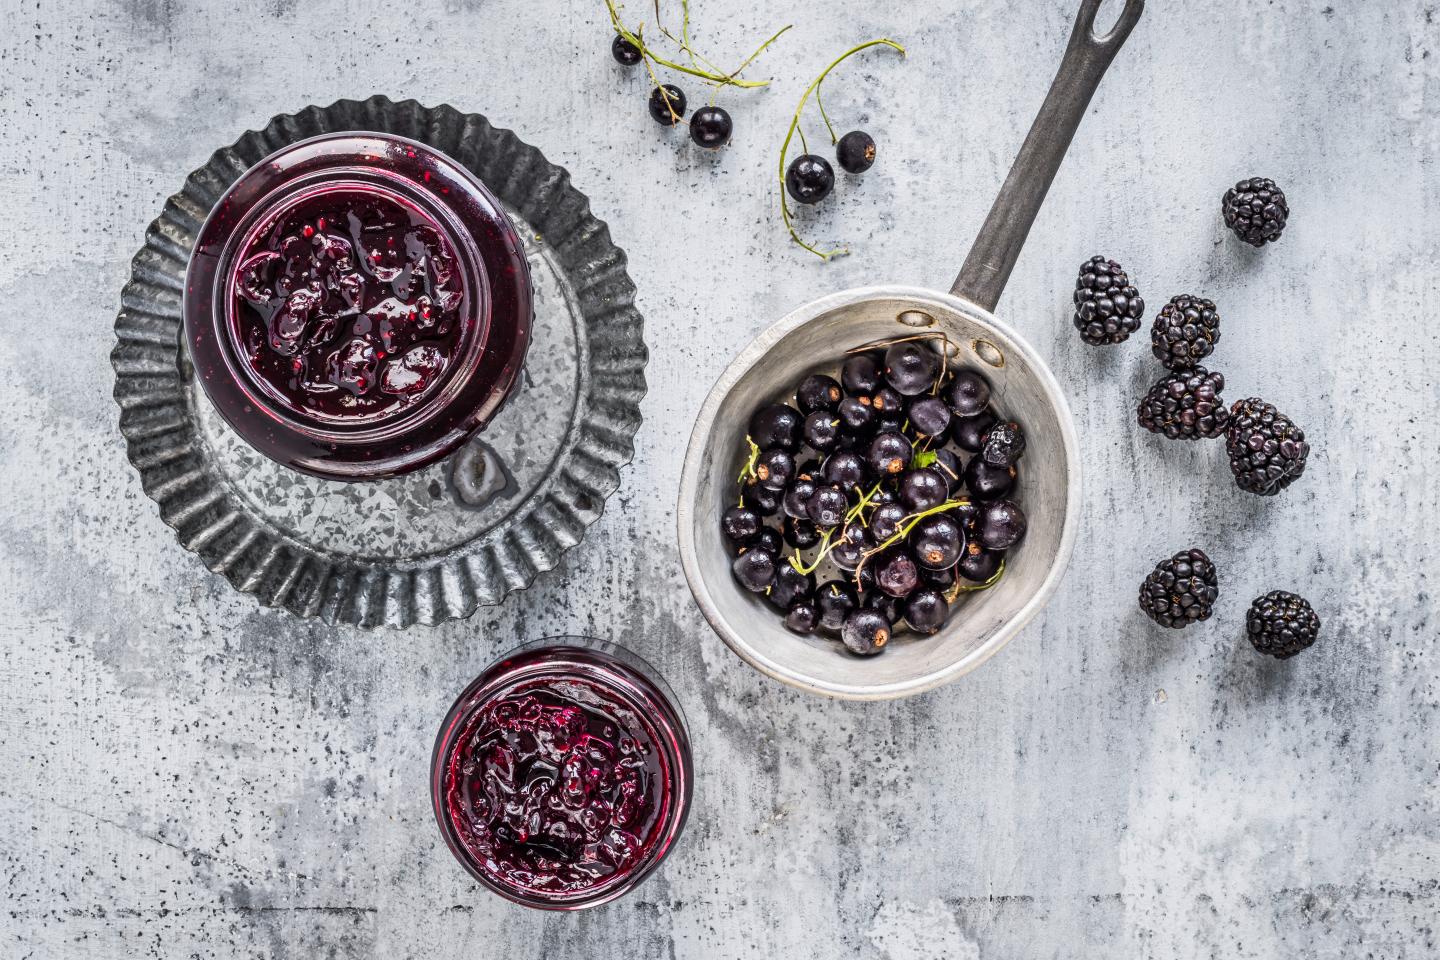 Blackcurrant and blackberry jam